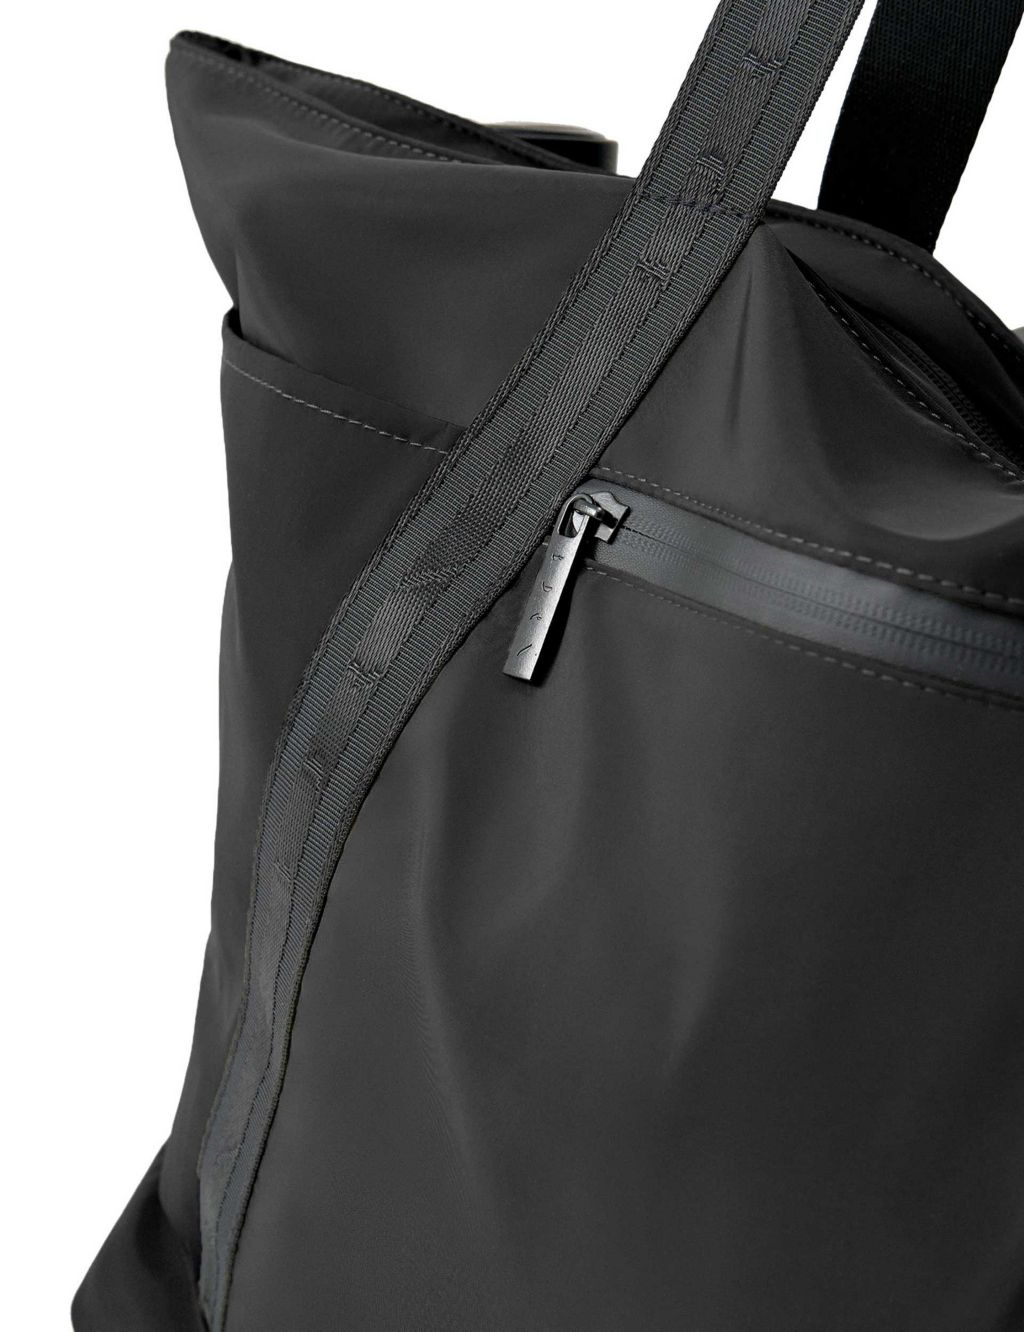 Away Multi Pocket Gym Bag | BORN | M&S